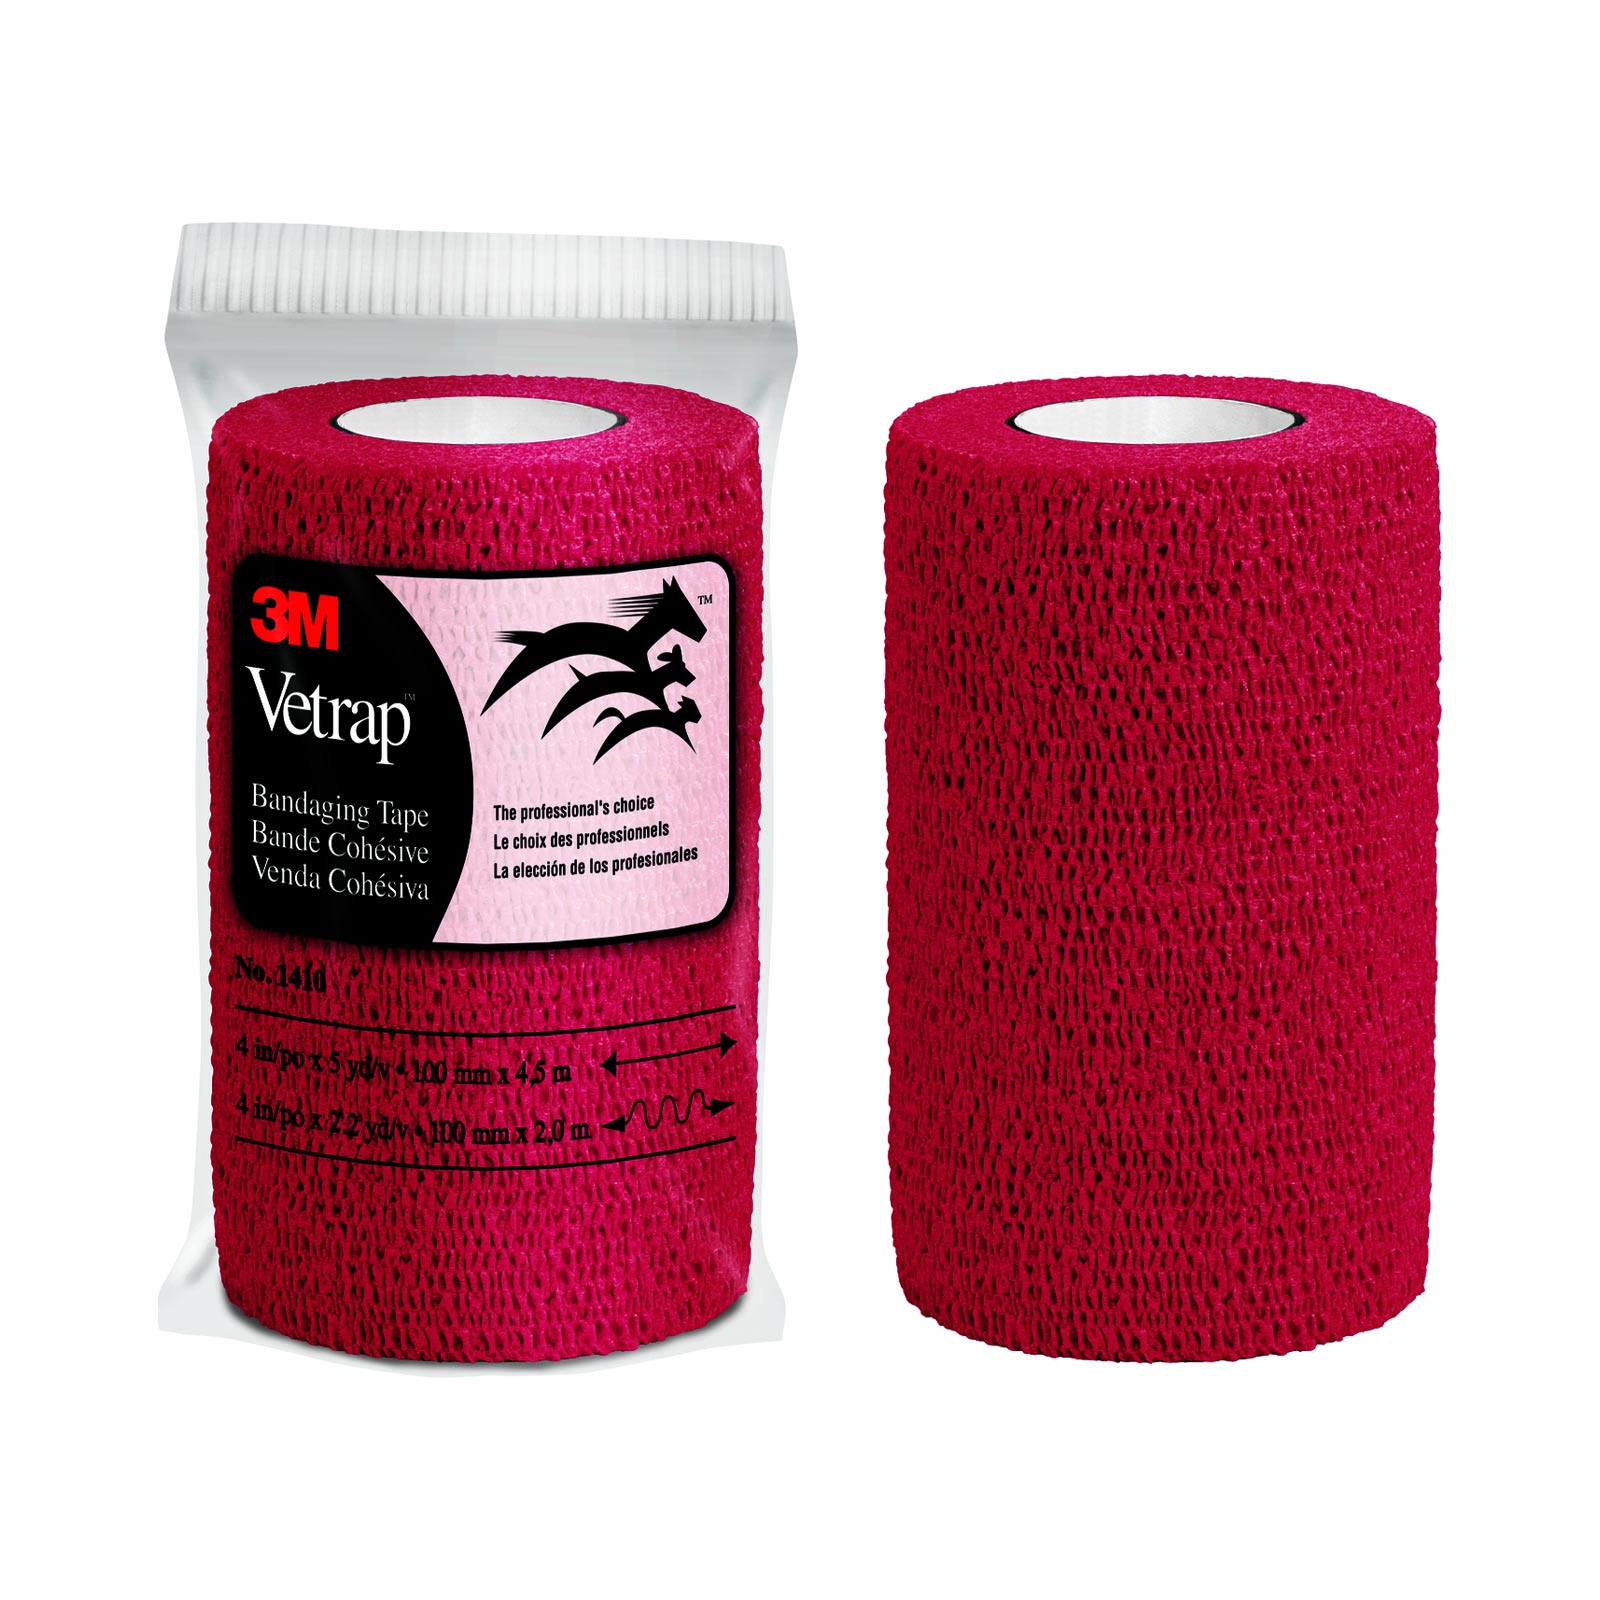 3M Vetrap Bandaging Tape 4 Inch 1410R (Red Rolls)